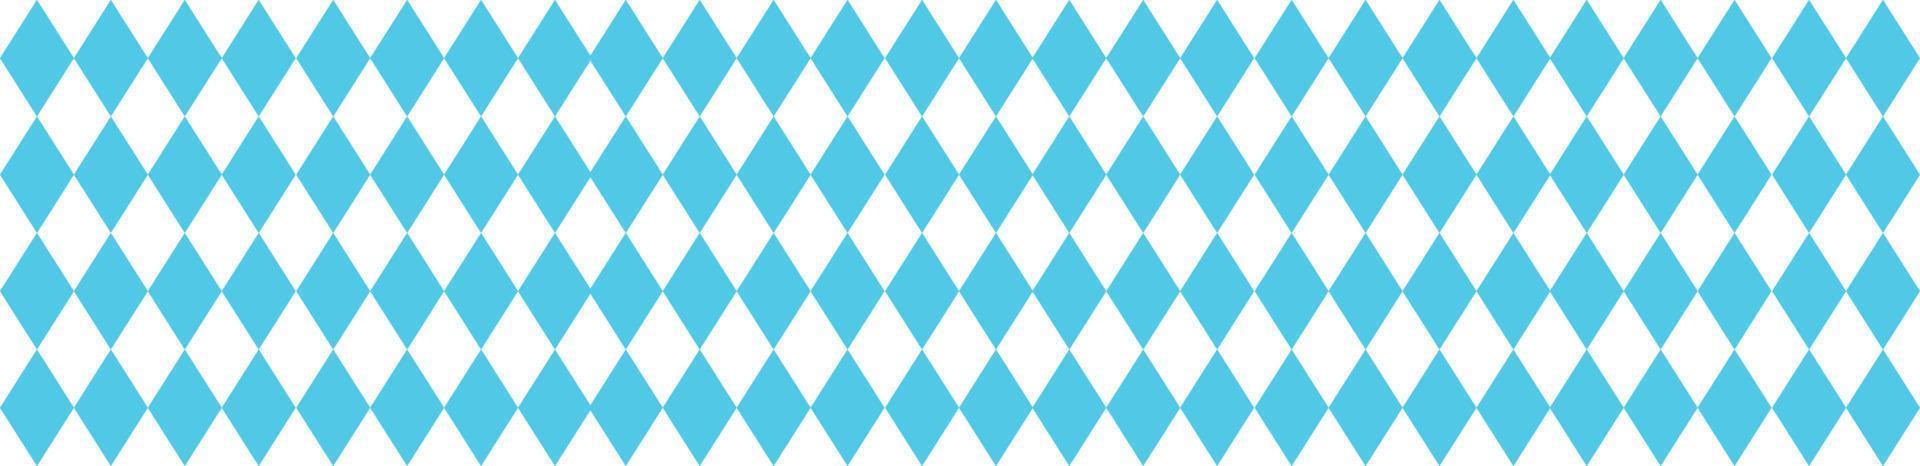 patrón bávaro para el oktoberfest. textura de rombo azul alemán. ilustración vectorial vector